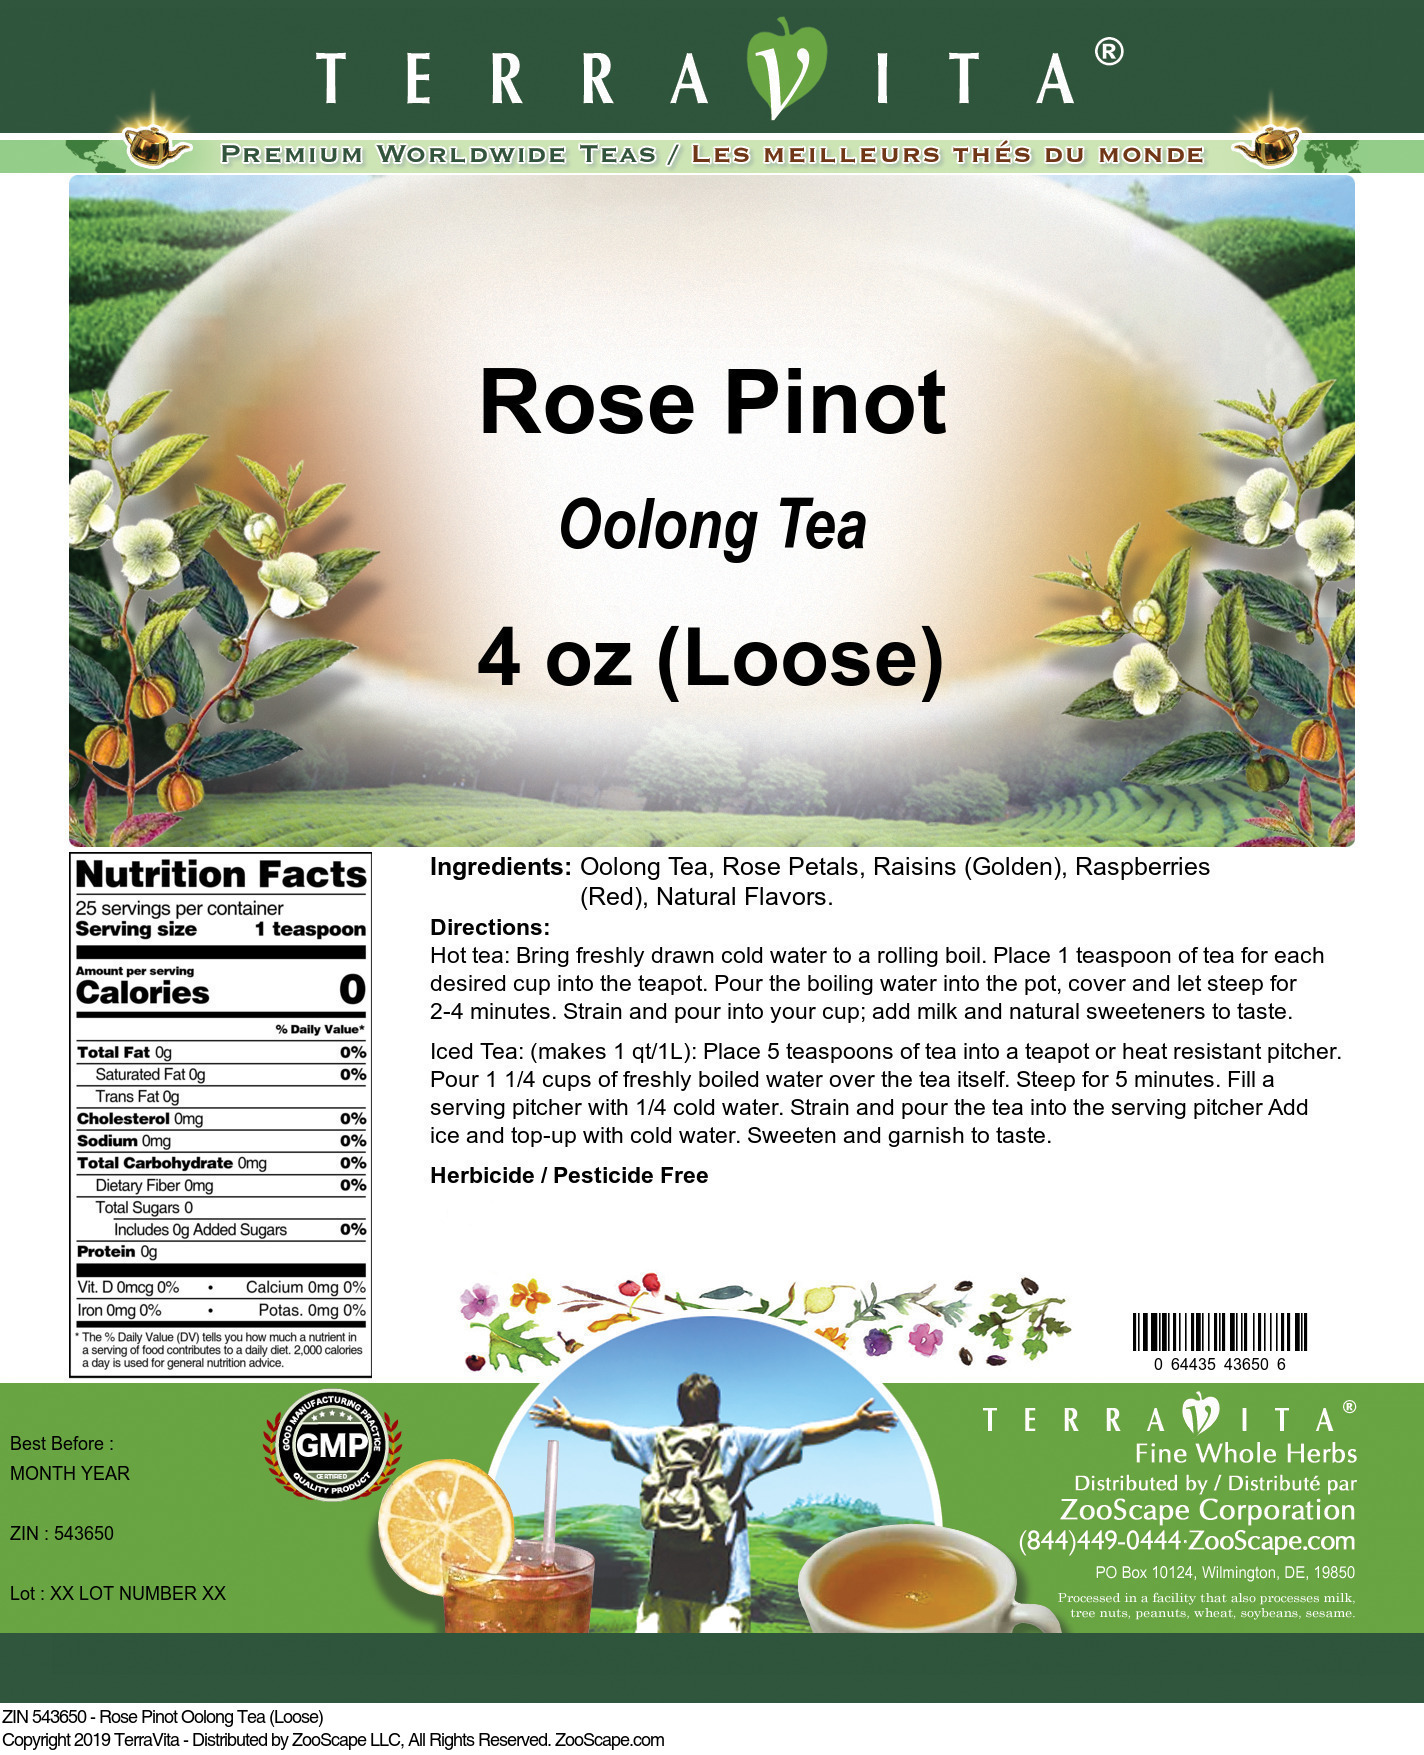 Rose Pinot Oolong Tea (Loose) - Label